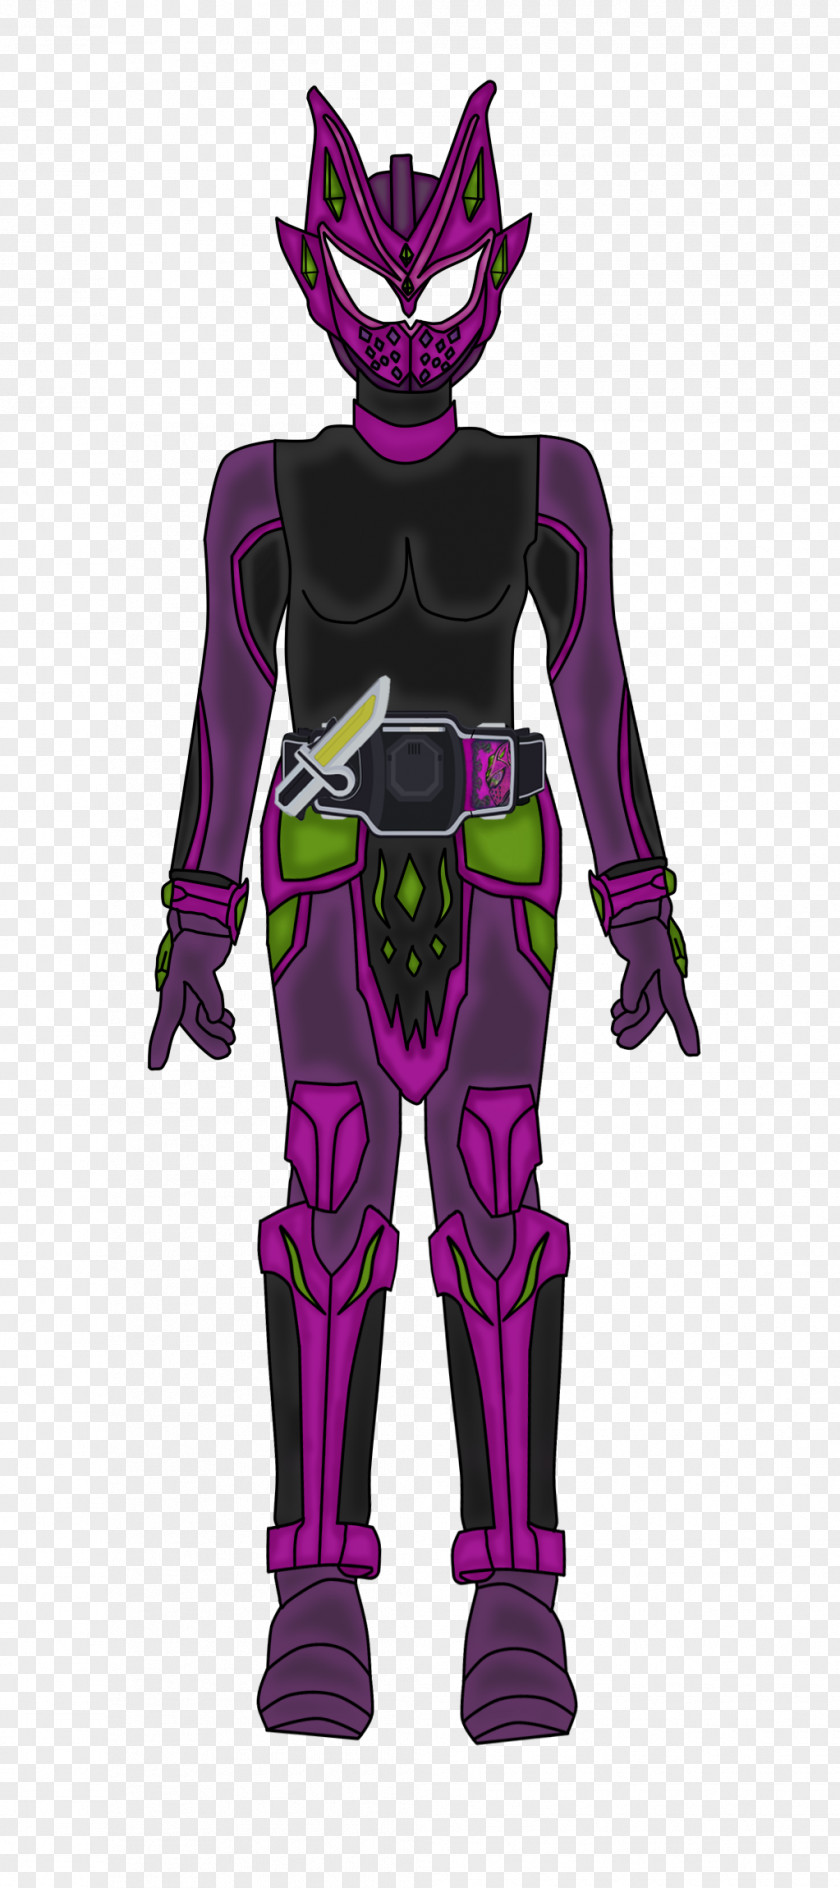 Kamen Rider W Costume Design Supervillain Legendary Creature PNG